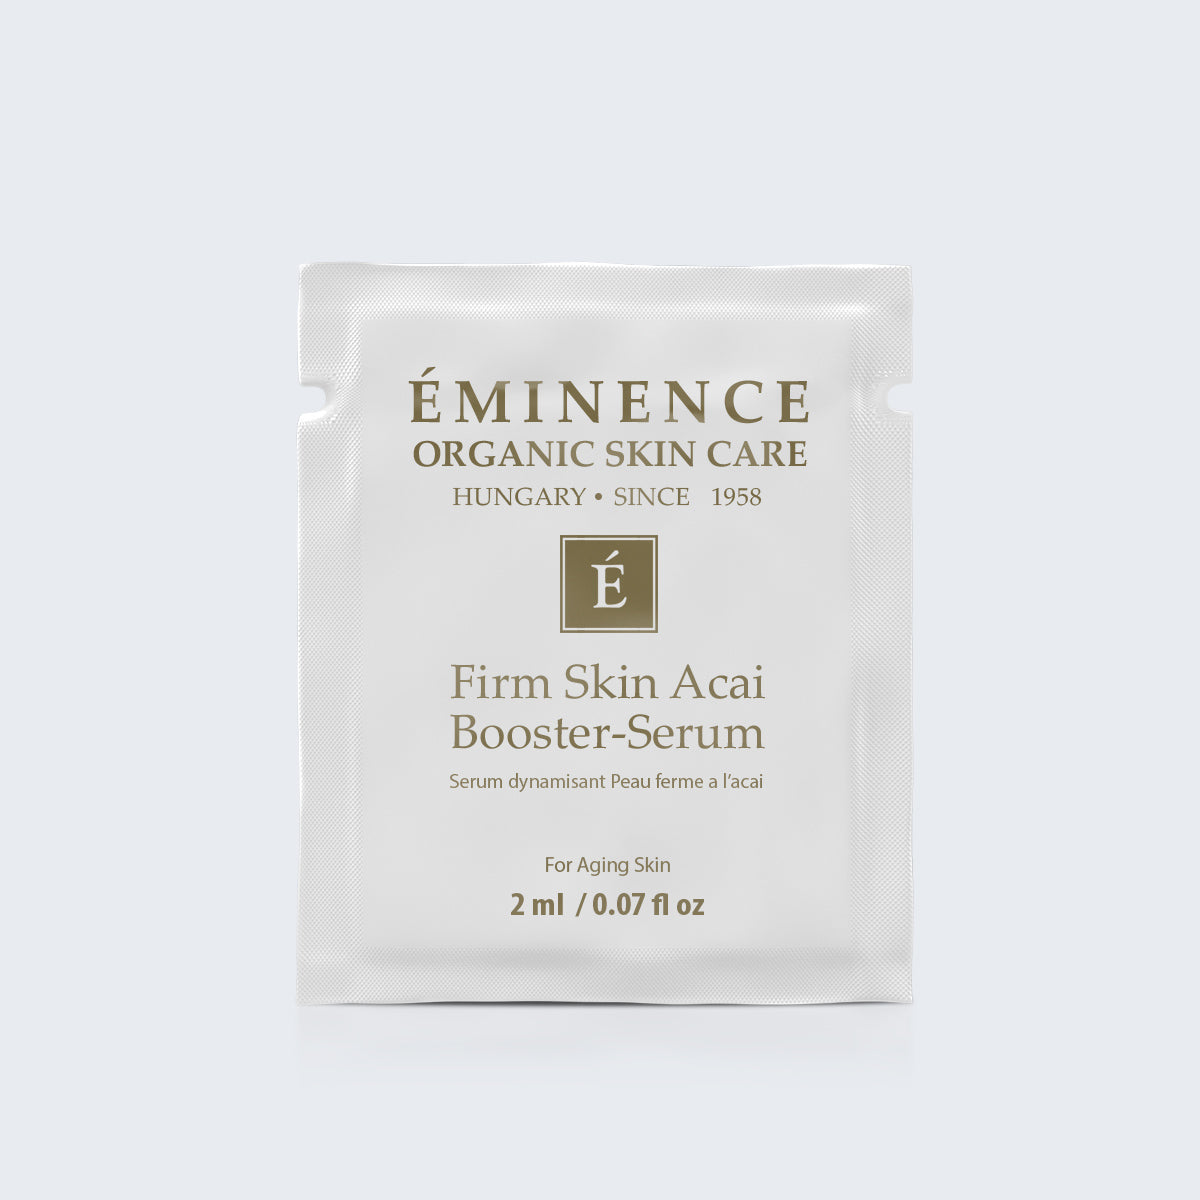 Eminence Organics Firm Skin Acai Booster-Serum Card Sample